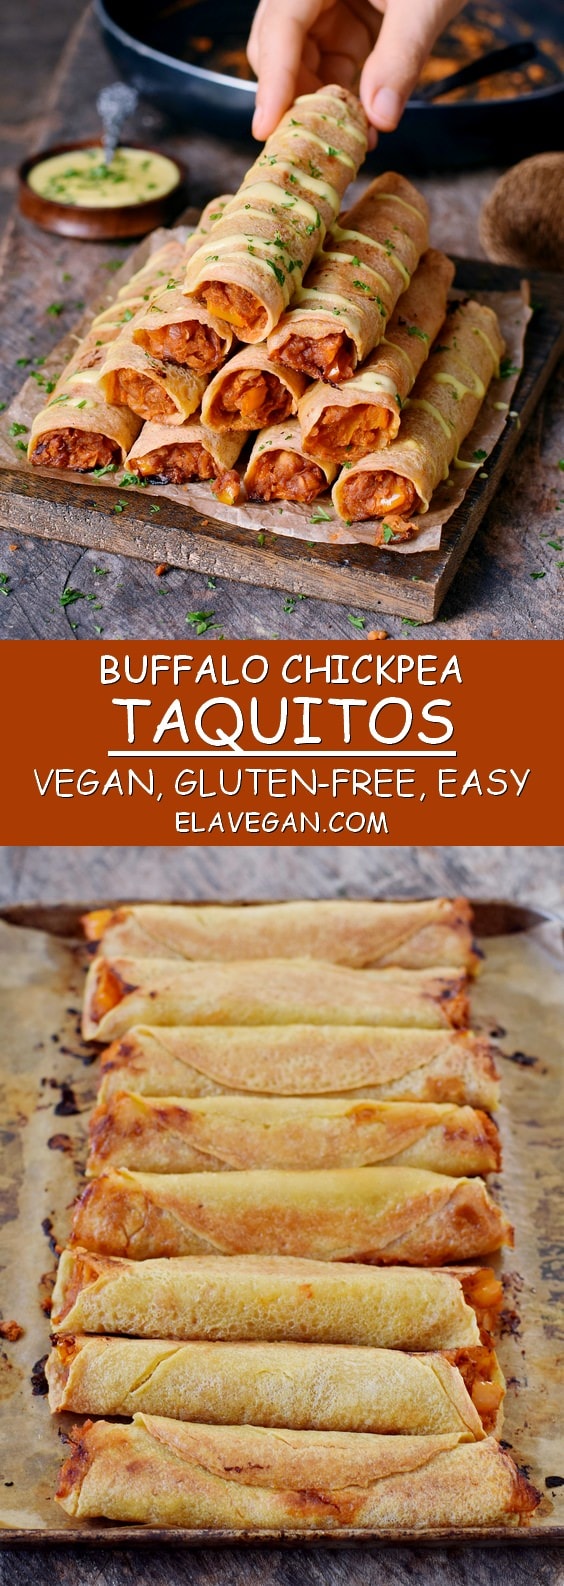 baked buffalo chickpea taquitos vegan gluten-free easy recipe pinterest